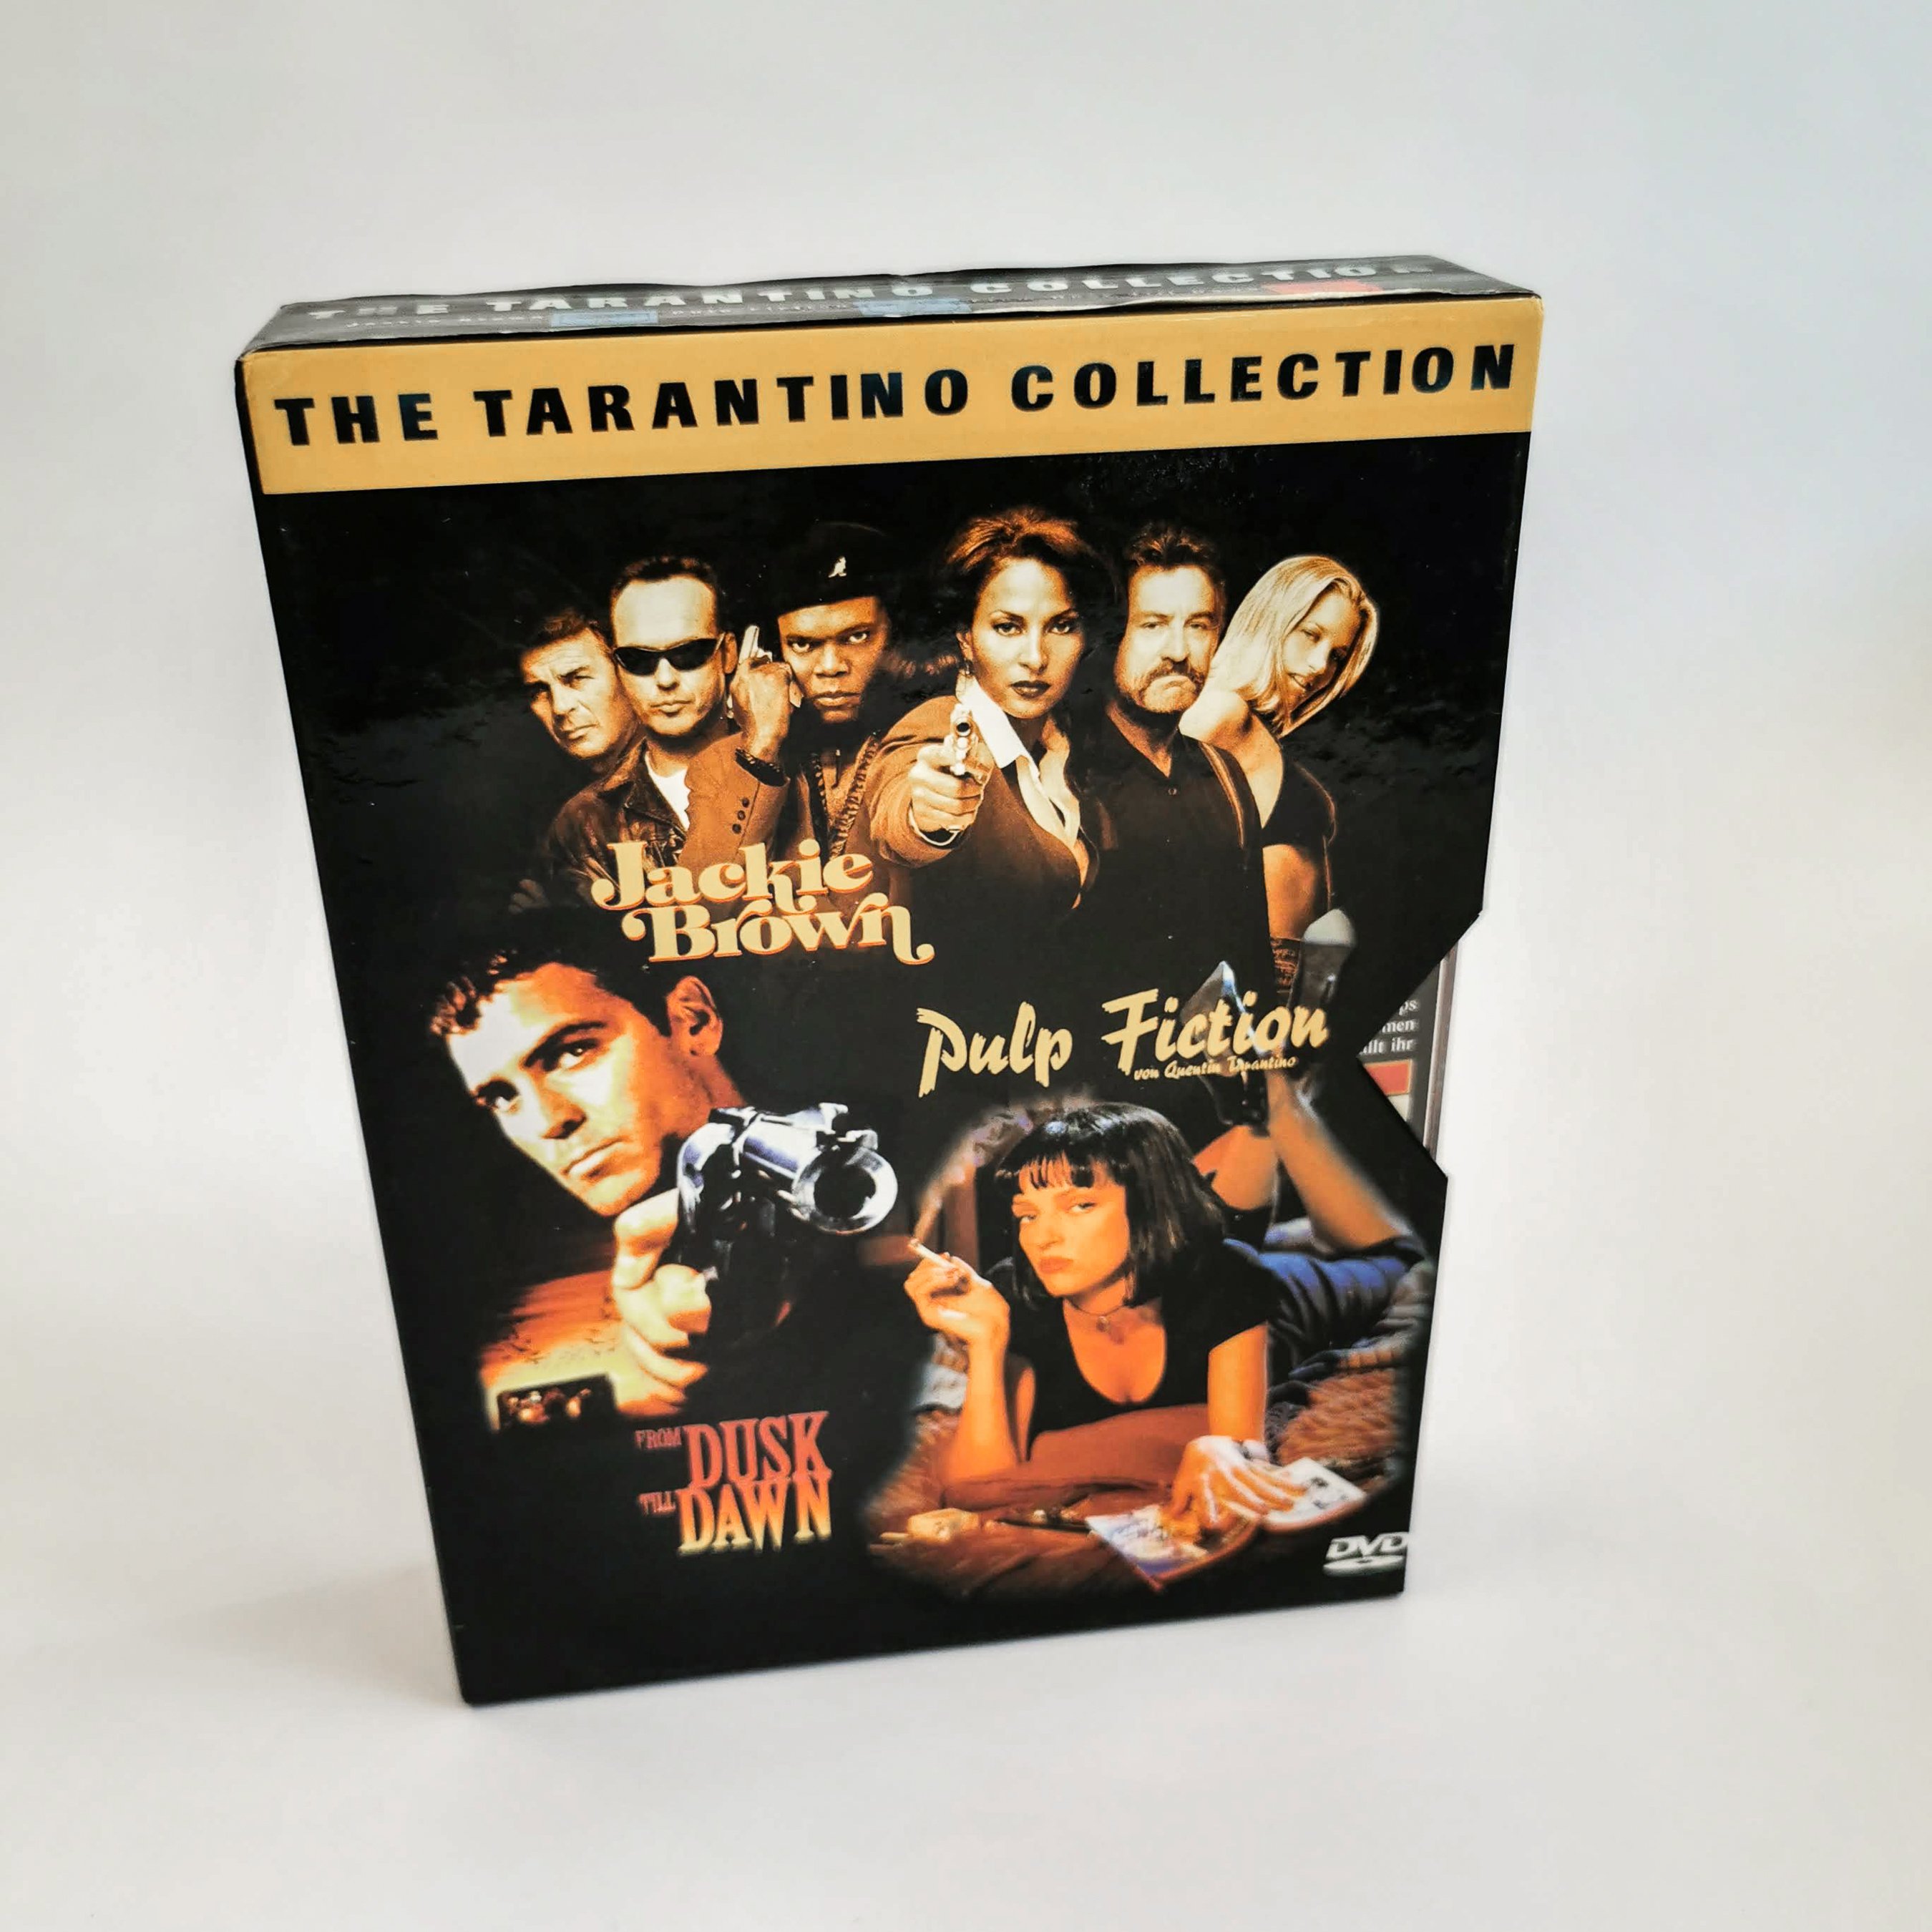 The Tarantino Gold Collection